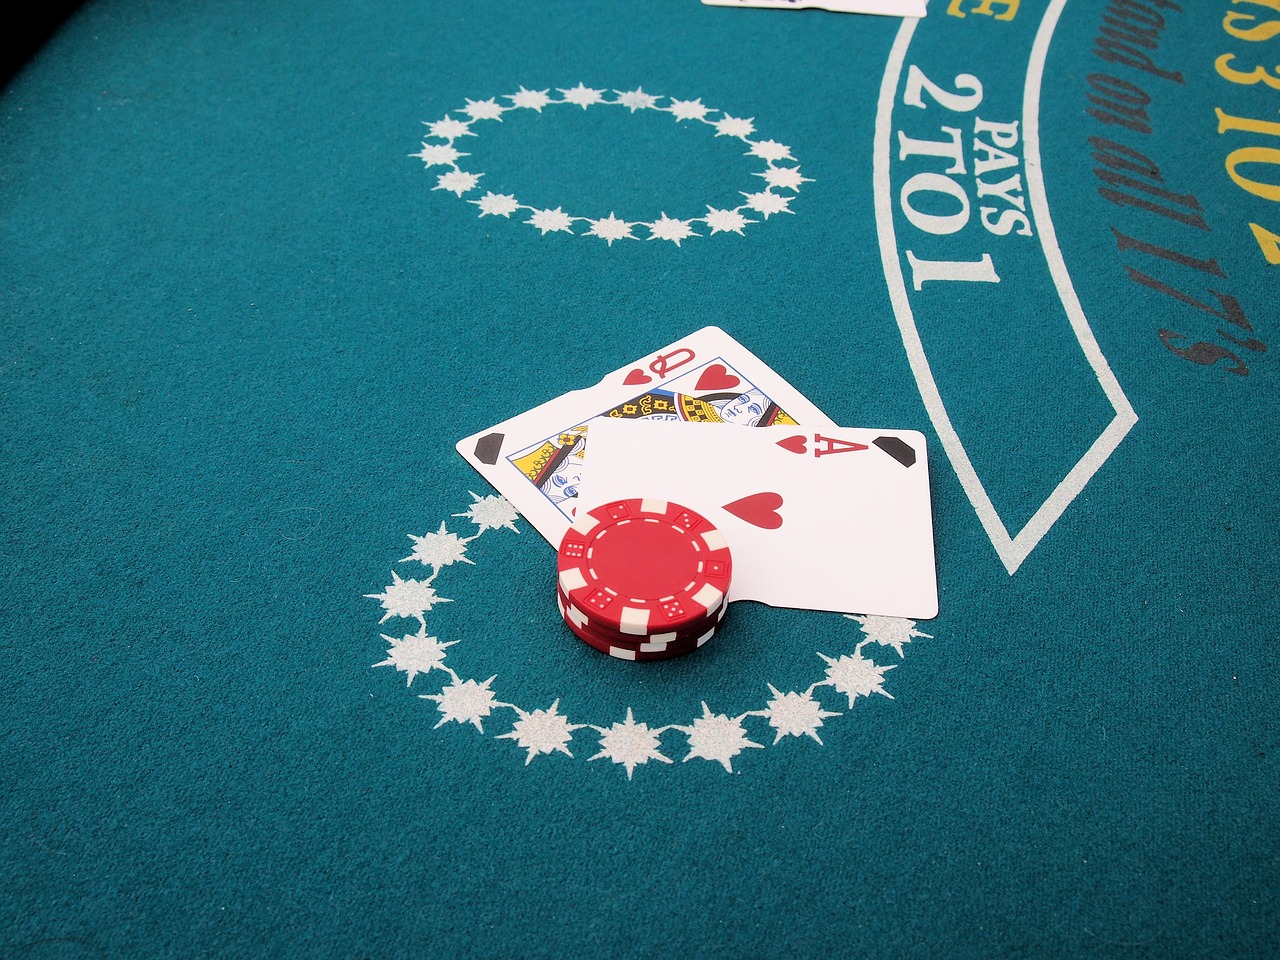 blackjack casino cards free photo